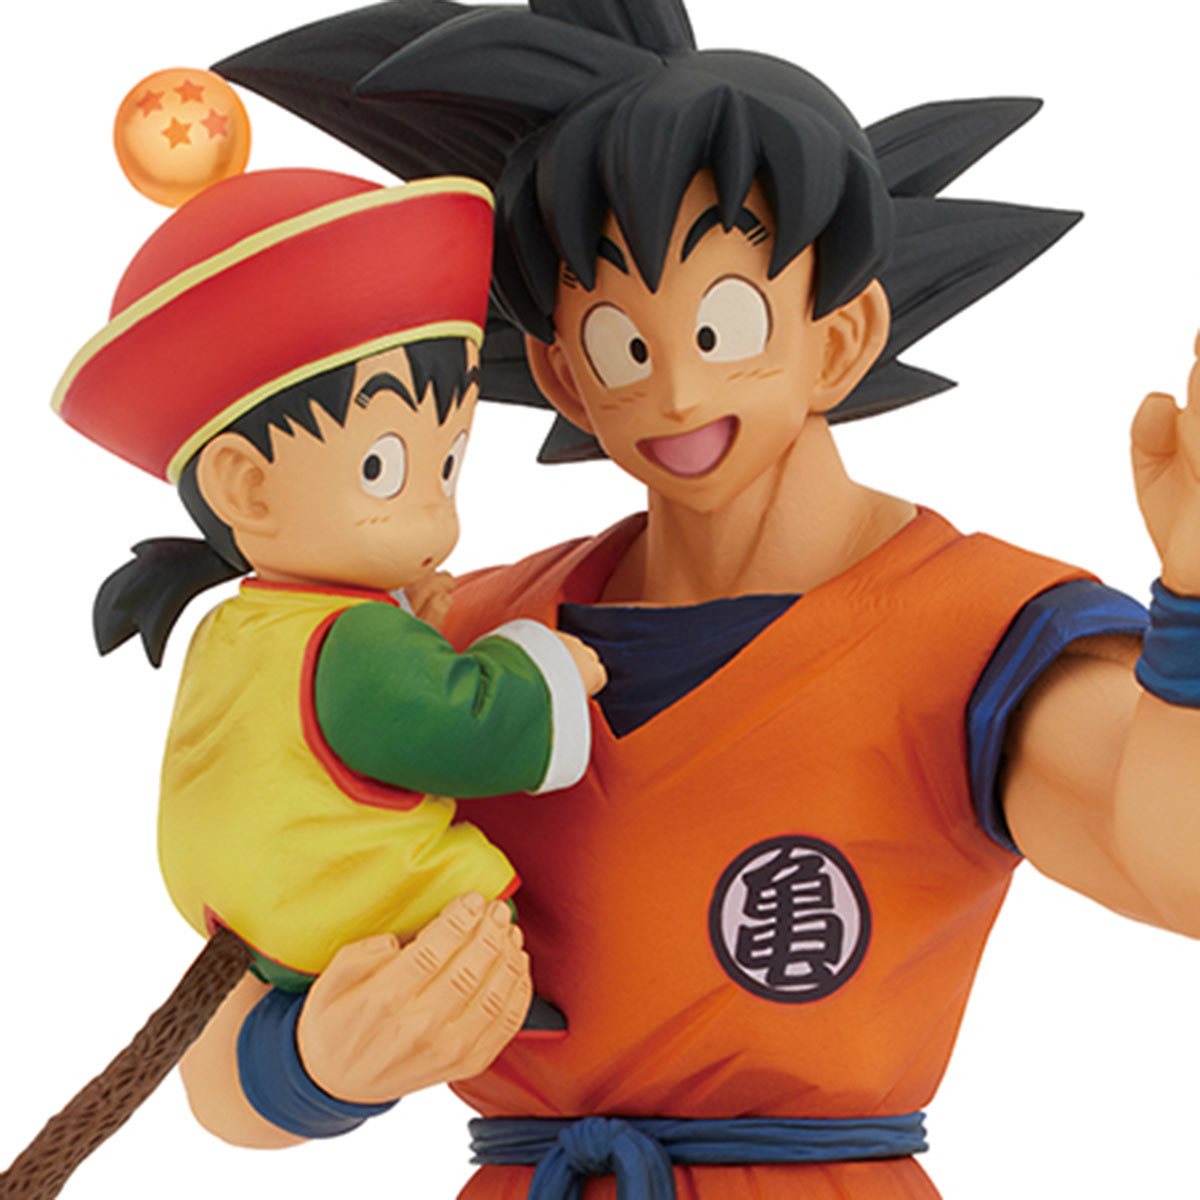 Bandai Tamashii Nations Vs Omnibus Amazing Masterlise: Dragon Ball Z - Son Goku y Son Gohan Estatua Ichibansho